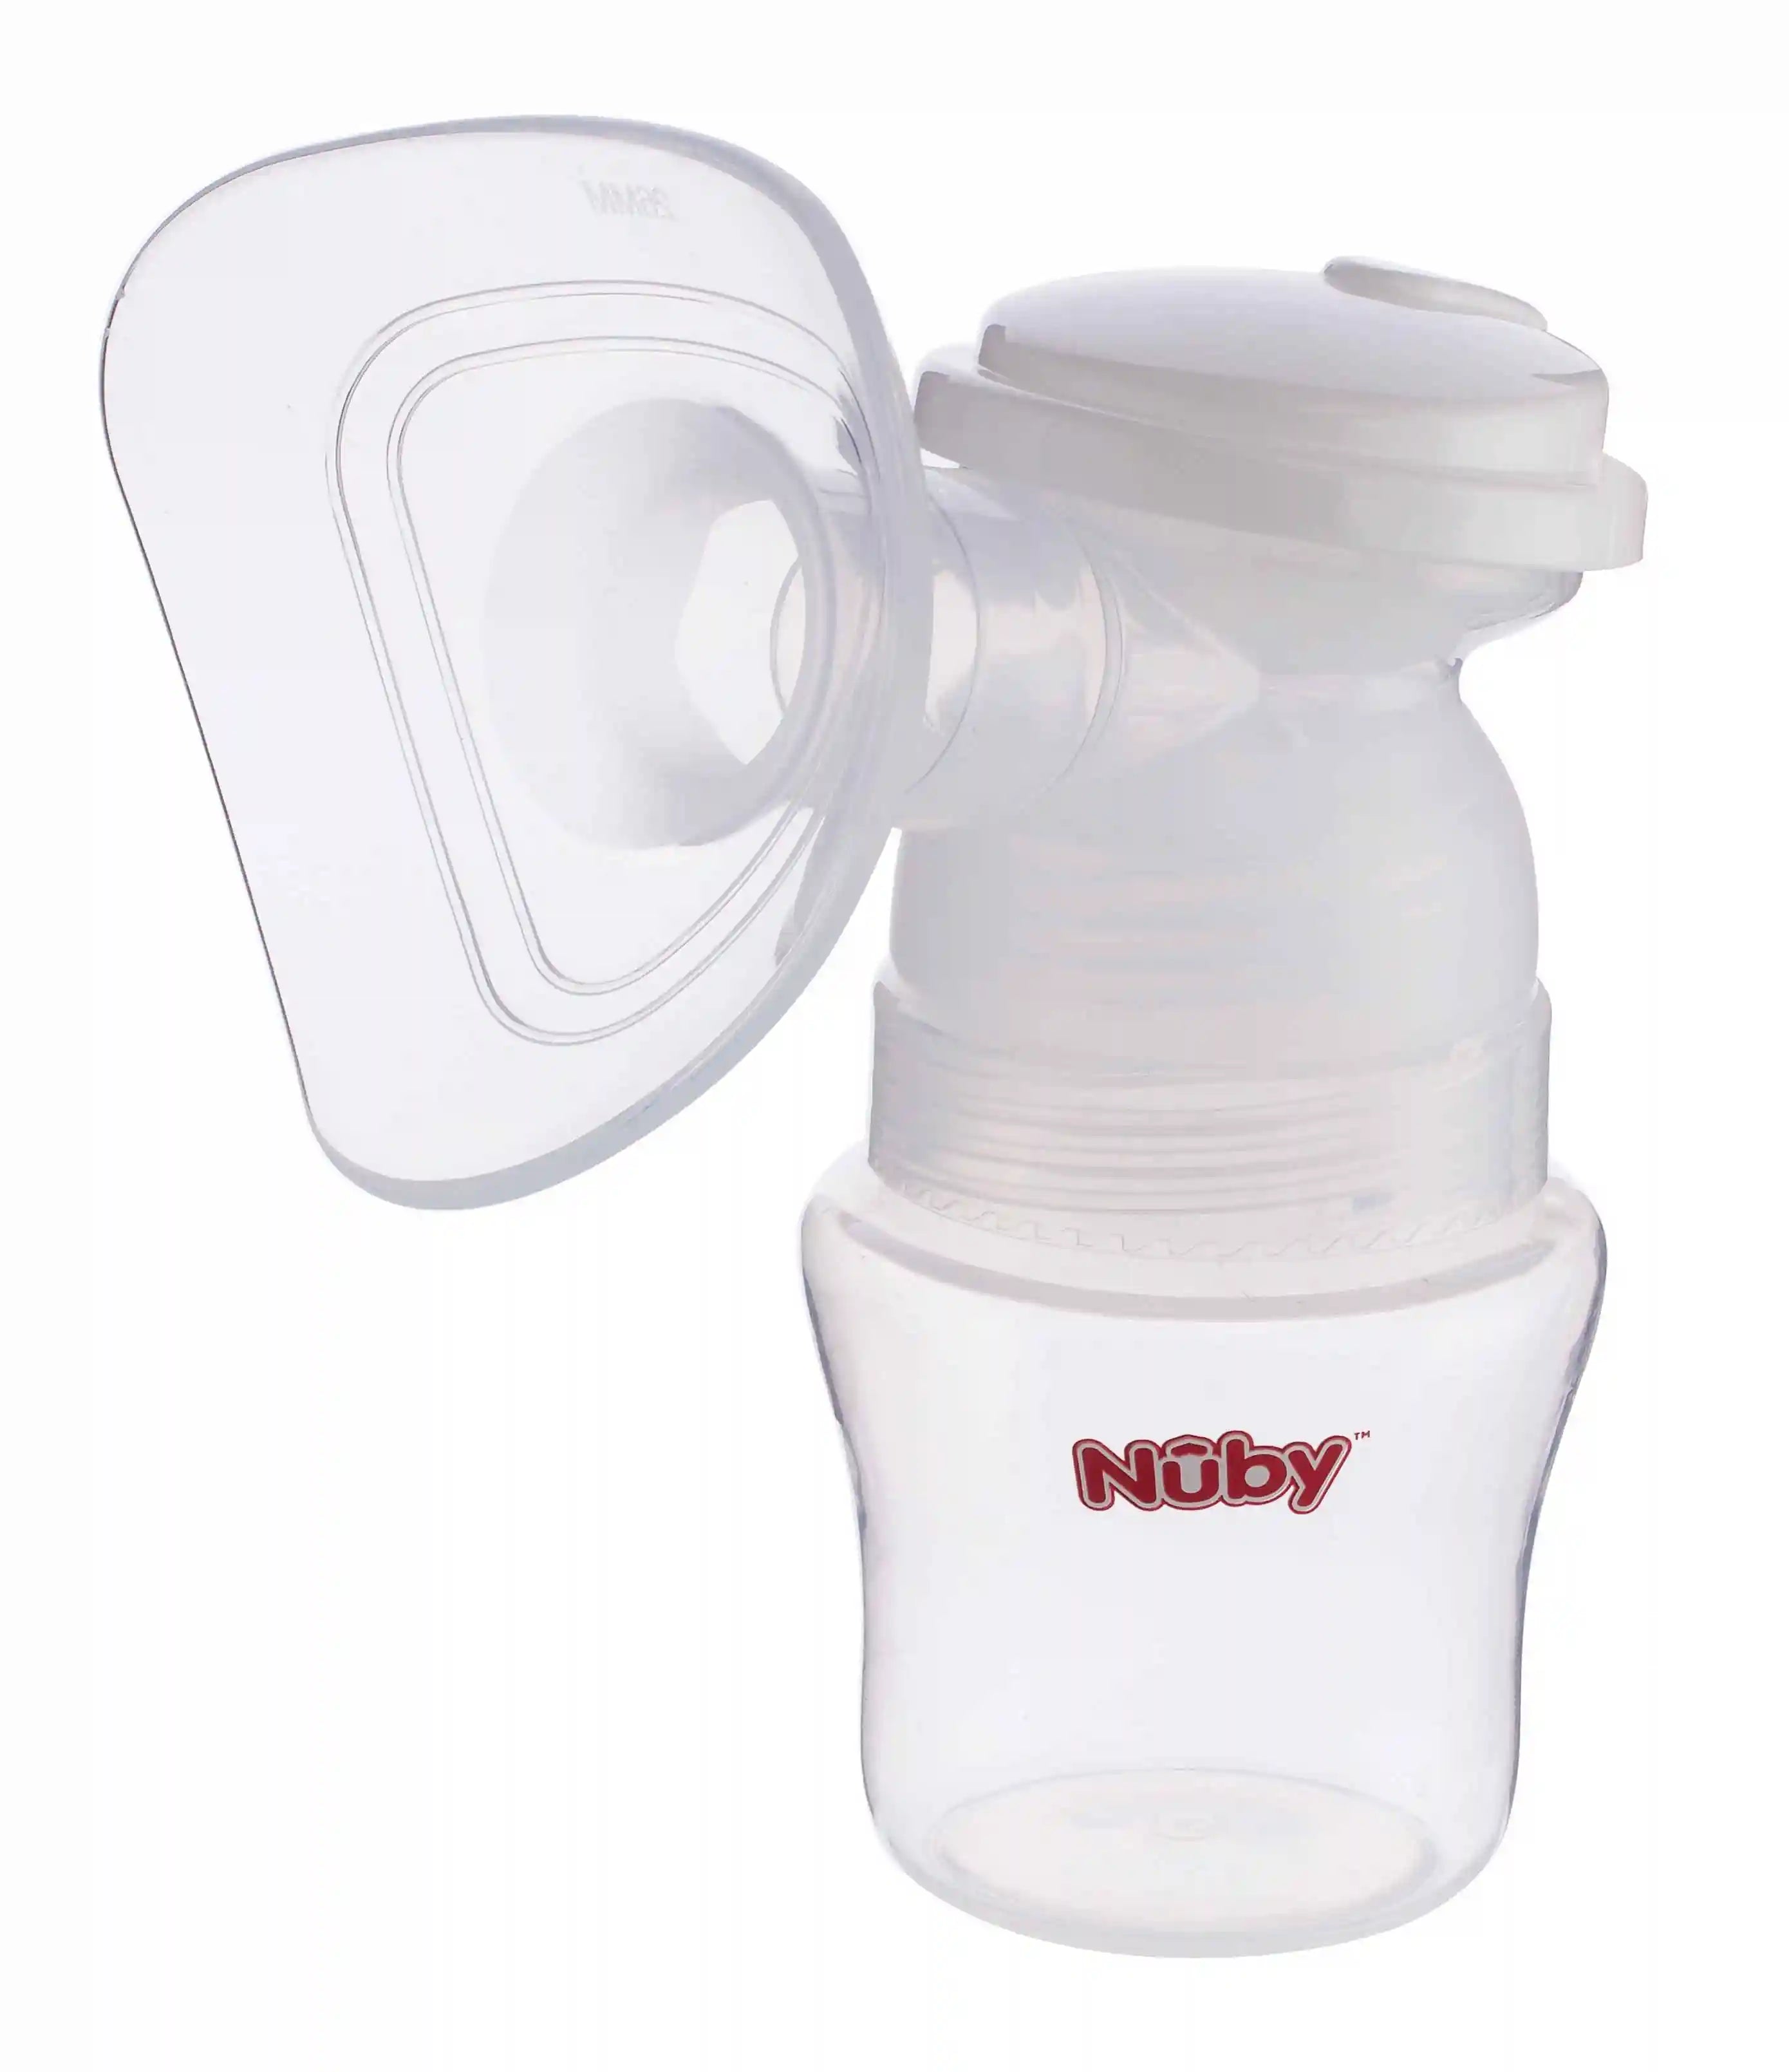 Nuby - Electric Breast Pump Set